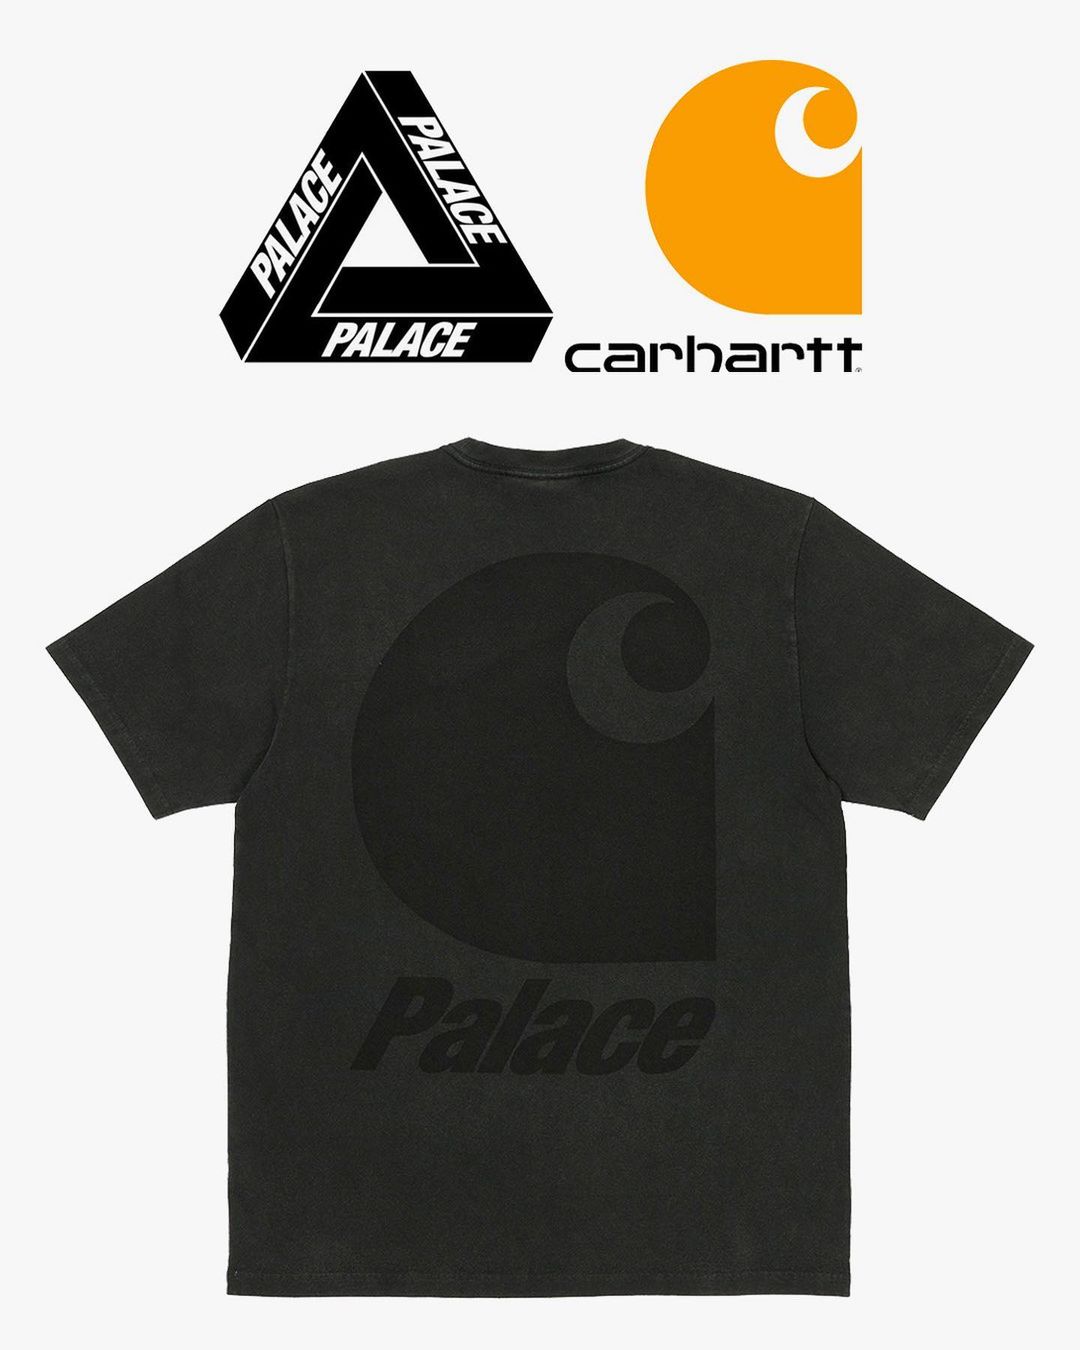 Palace Skateboards x Carhartt 2023年 コラボレーションが9/16 発売予定 (パレス スケートボード カーハート)